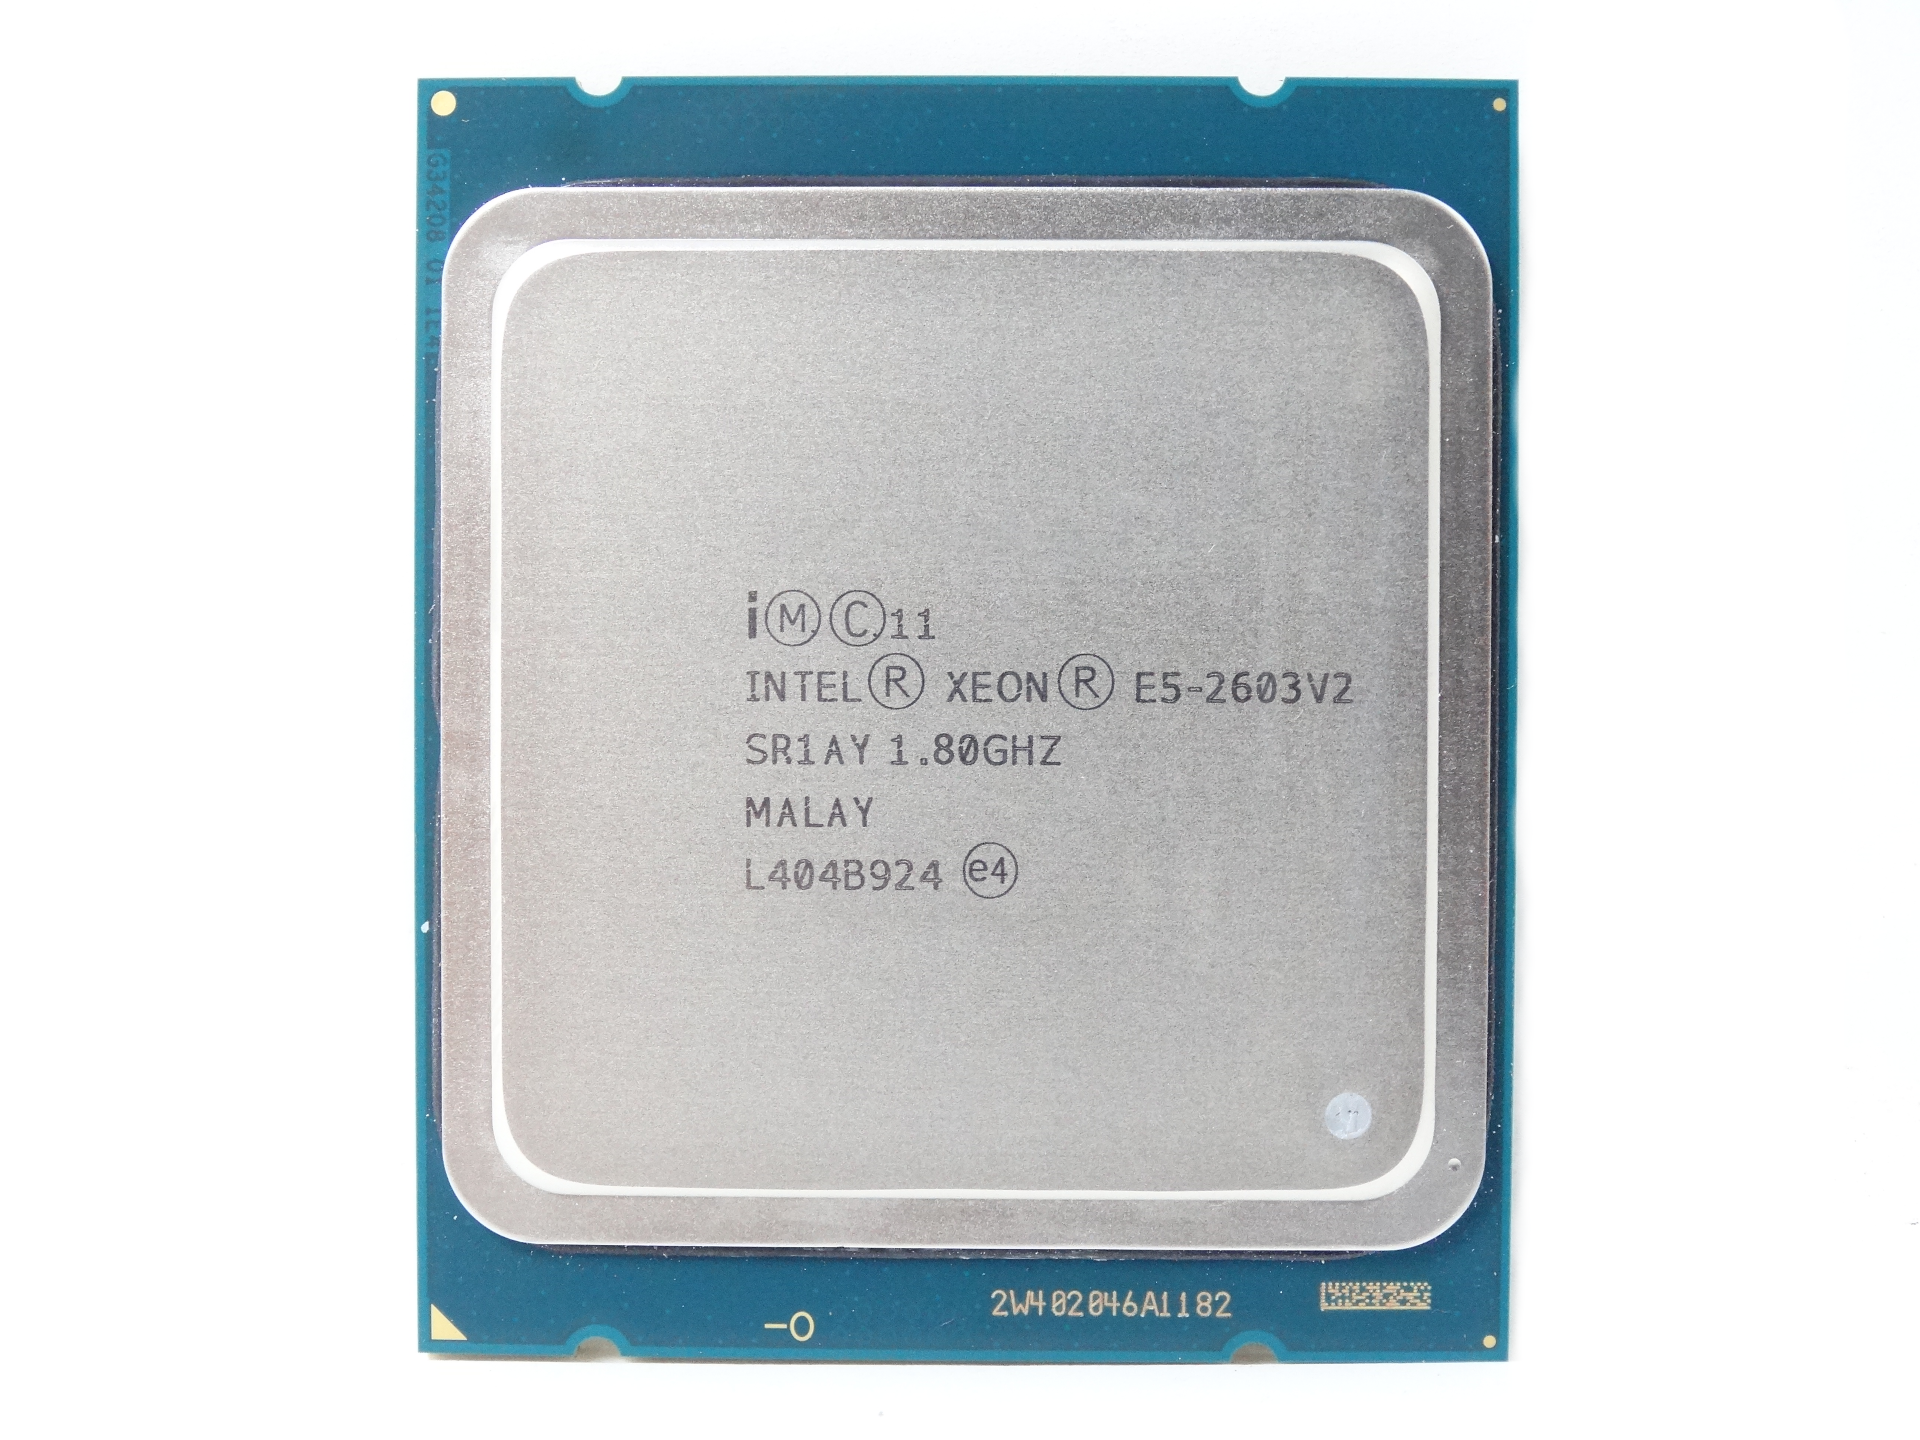 Intel Xeon E5-2603 V2 1.8GHz 4-Core 10MB Cache LGA 2011 CPU Processor (SR1AY)